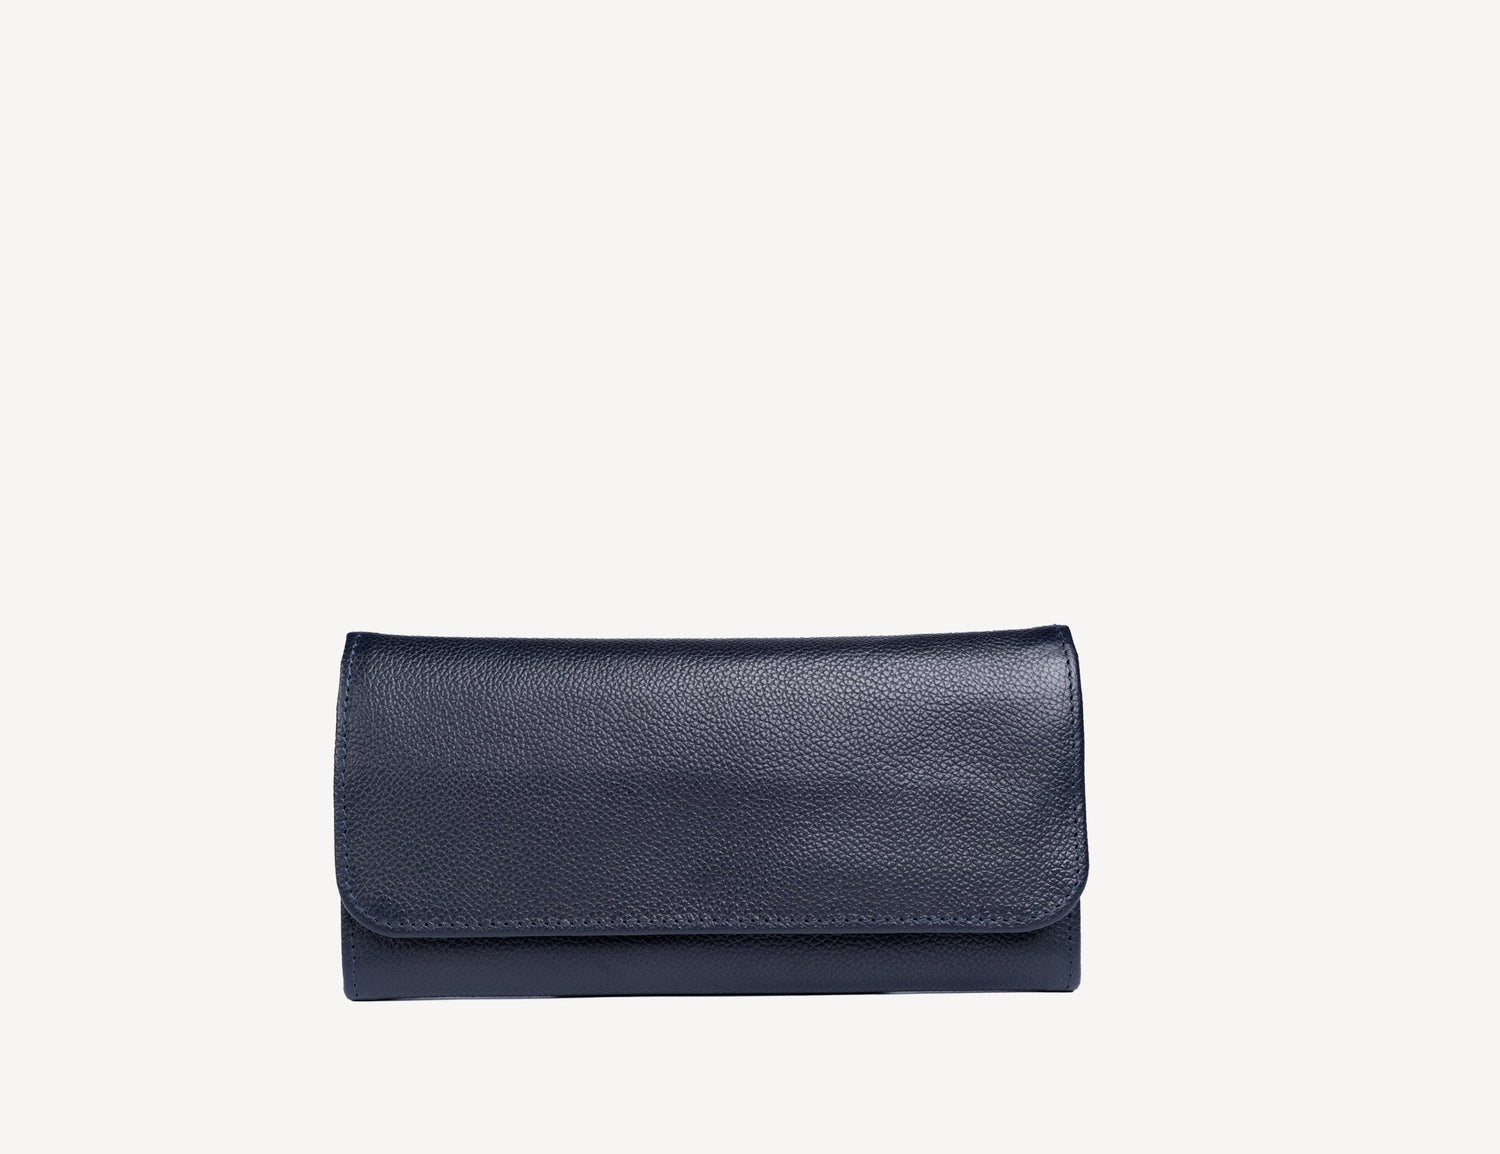 Clutch Wallet | Ladies Leather Clutch Wallet | Adelphi Kenya